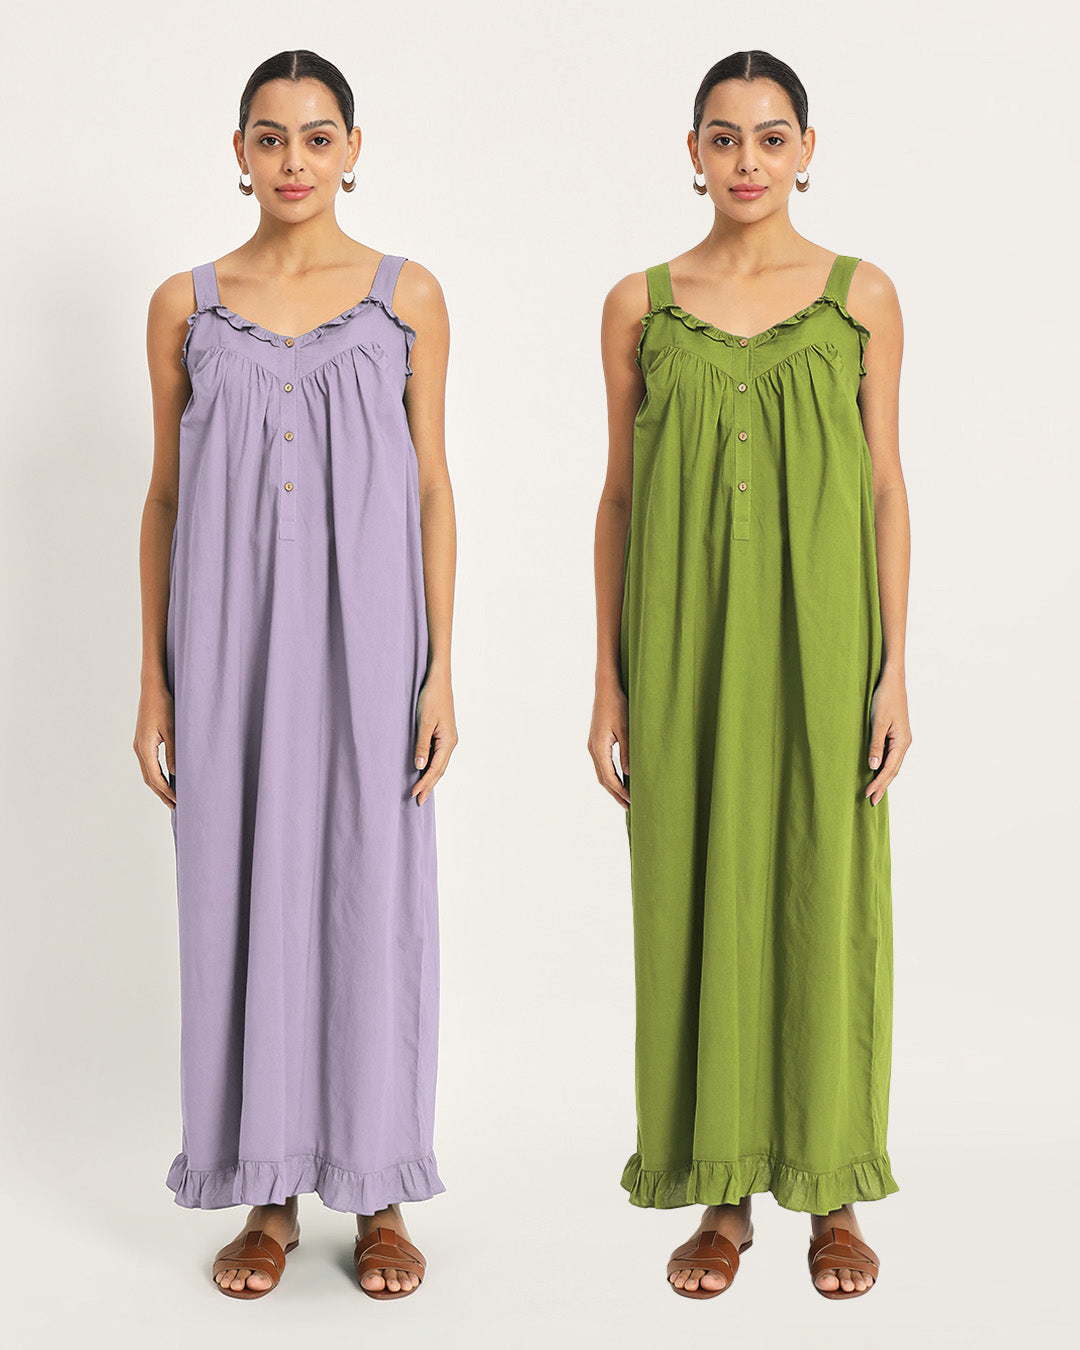 Combo: Lilac & Sage Green Twilight to Noon Nightdress